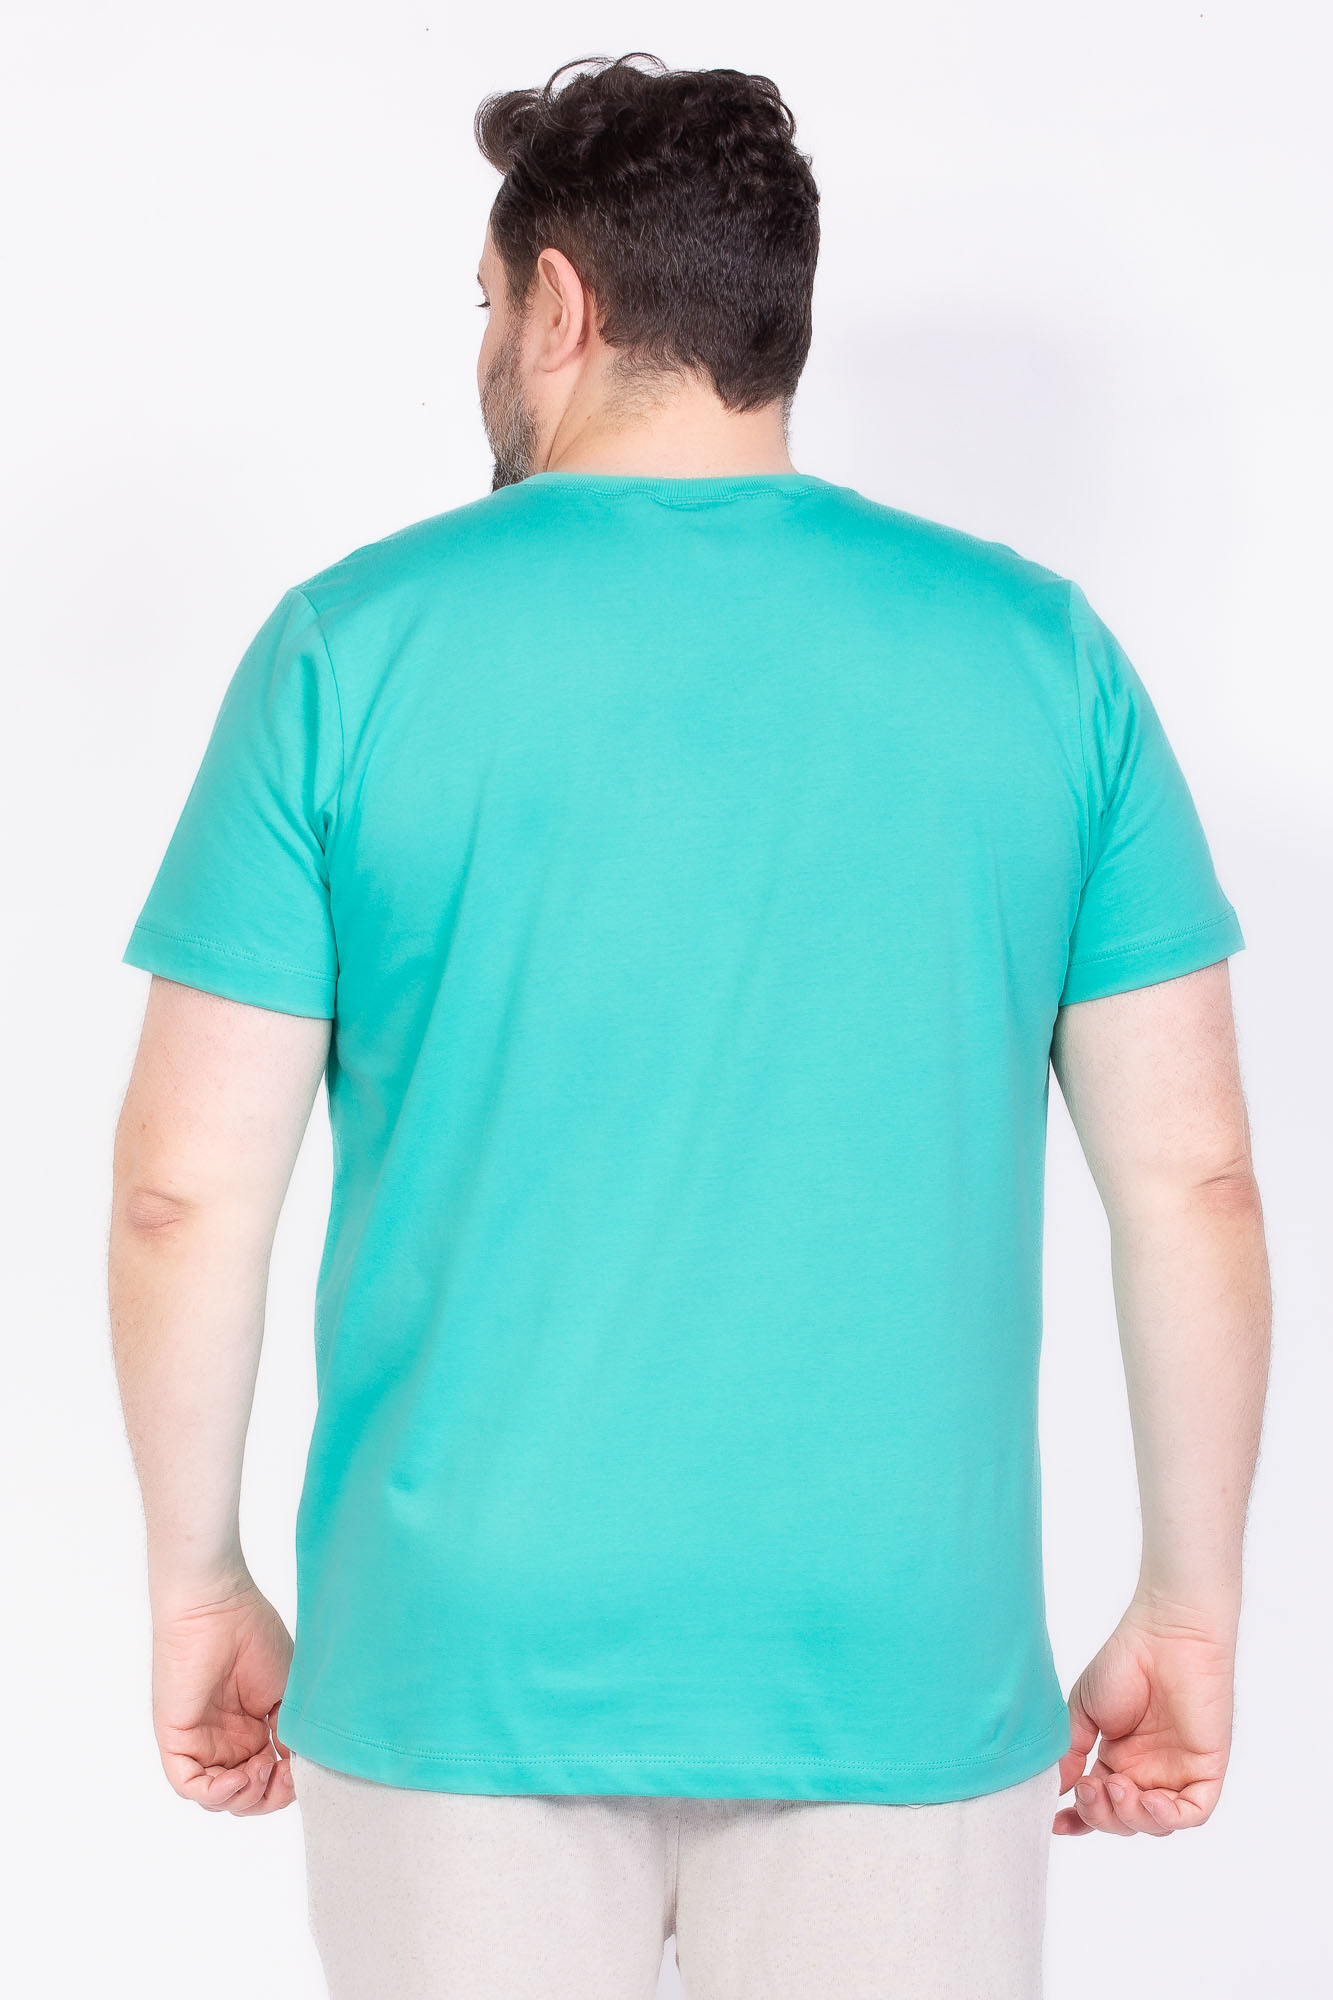 Camiseta Básica 100% algodão verde esmeralda Plus size